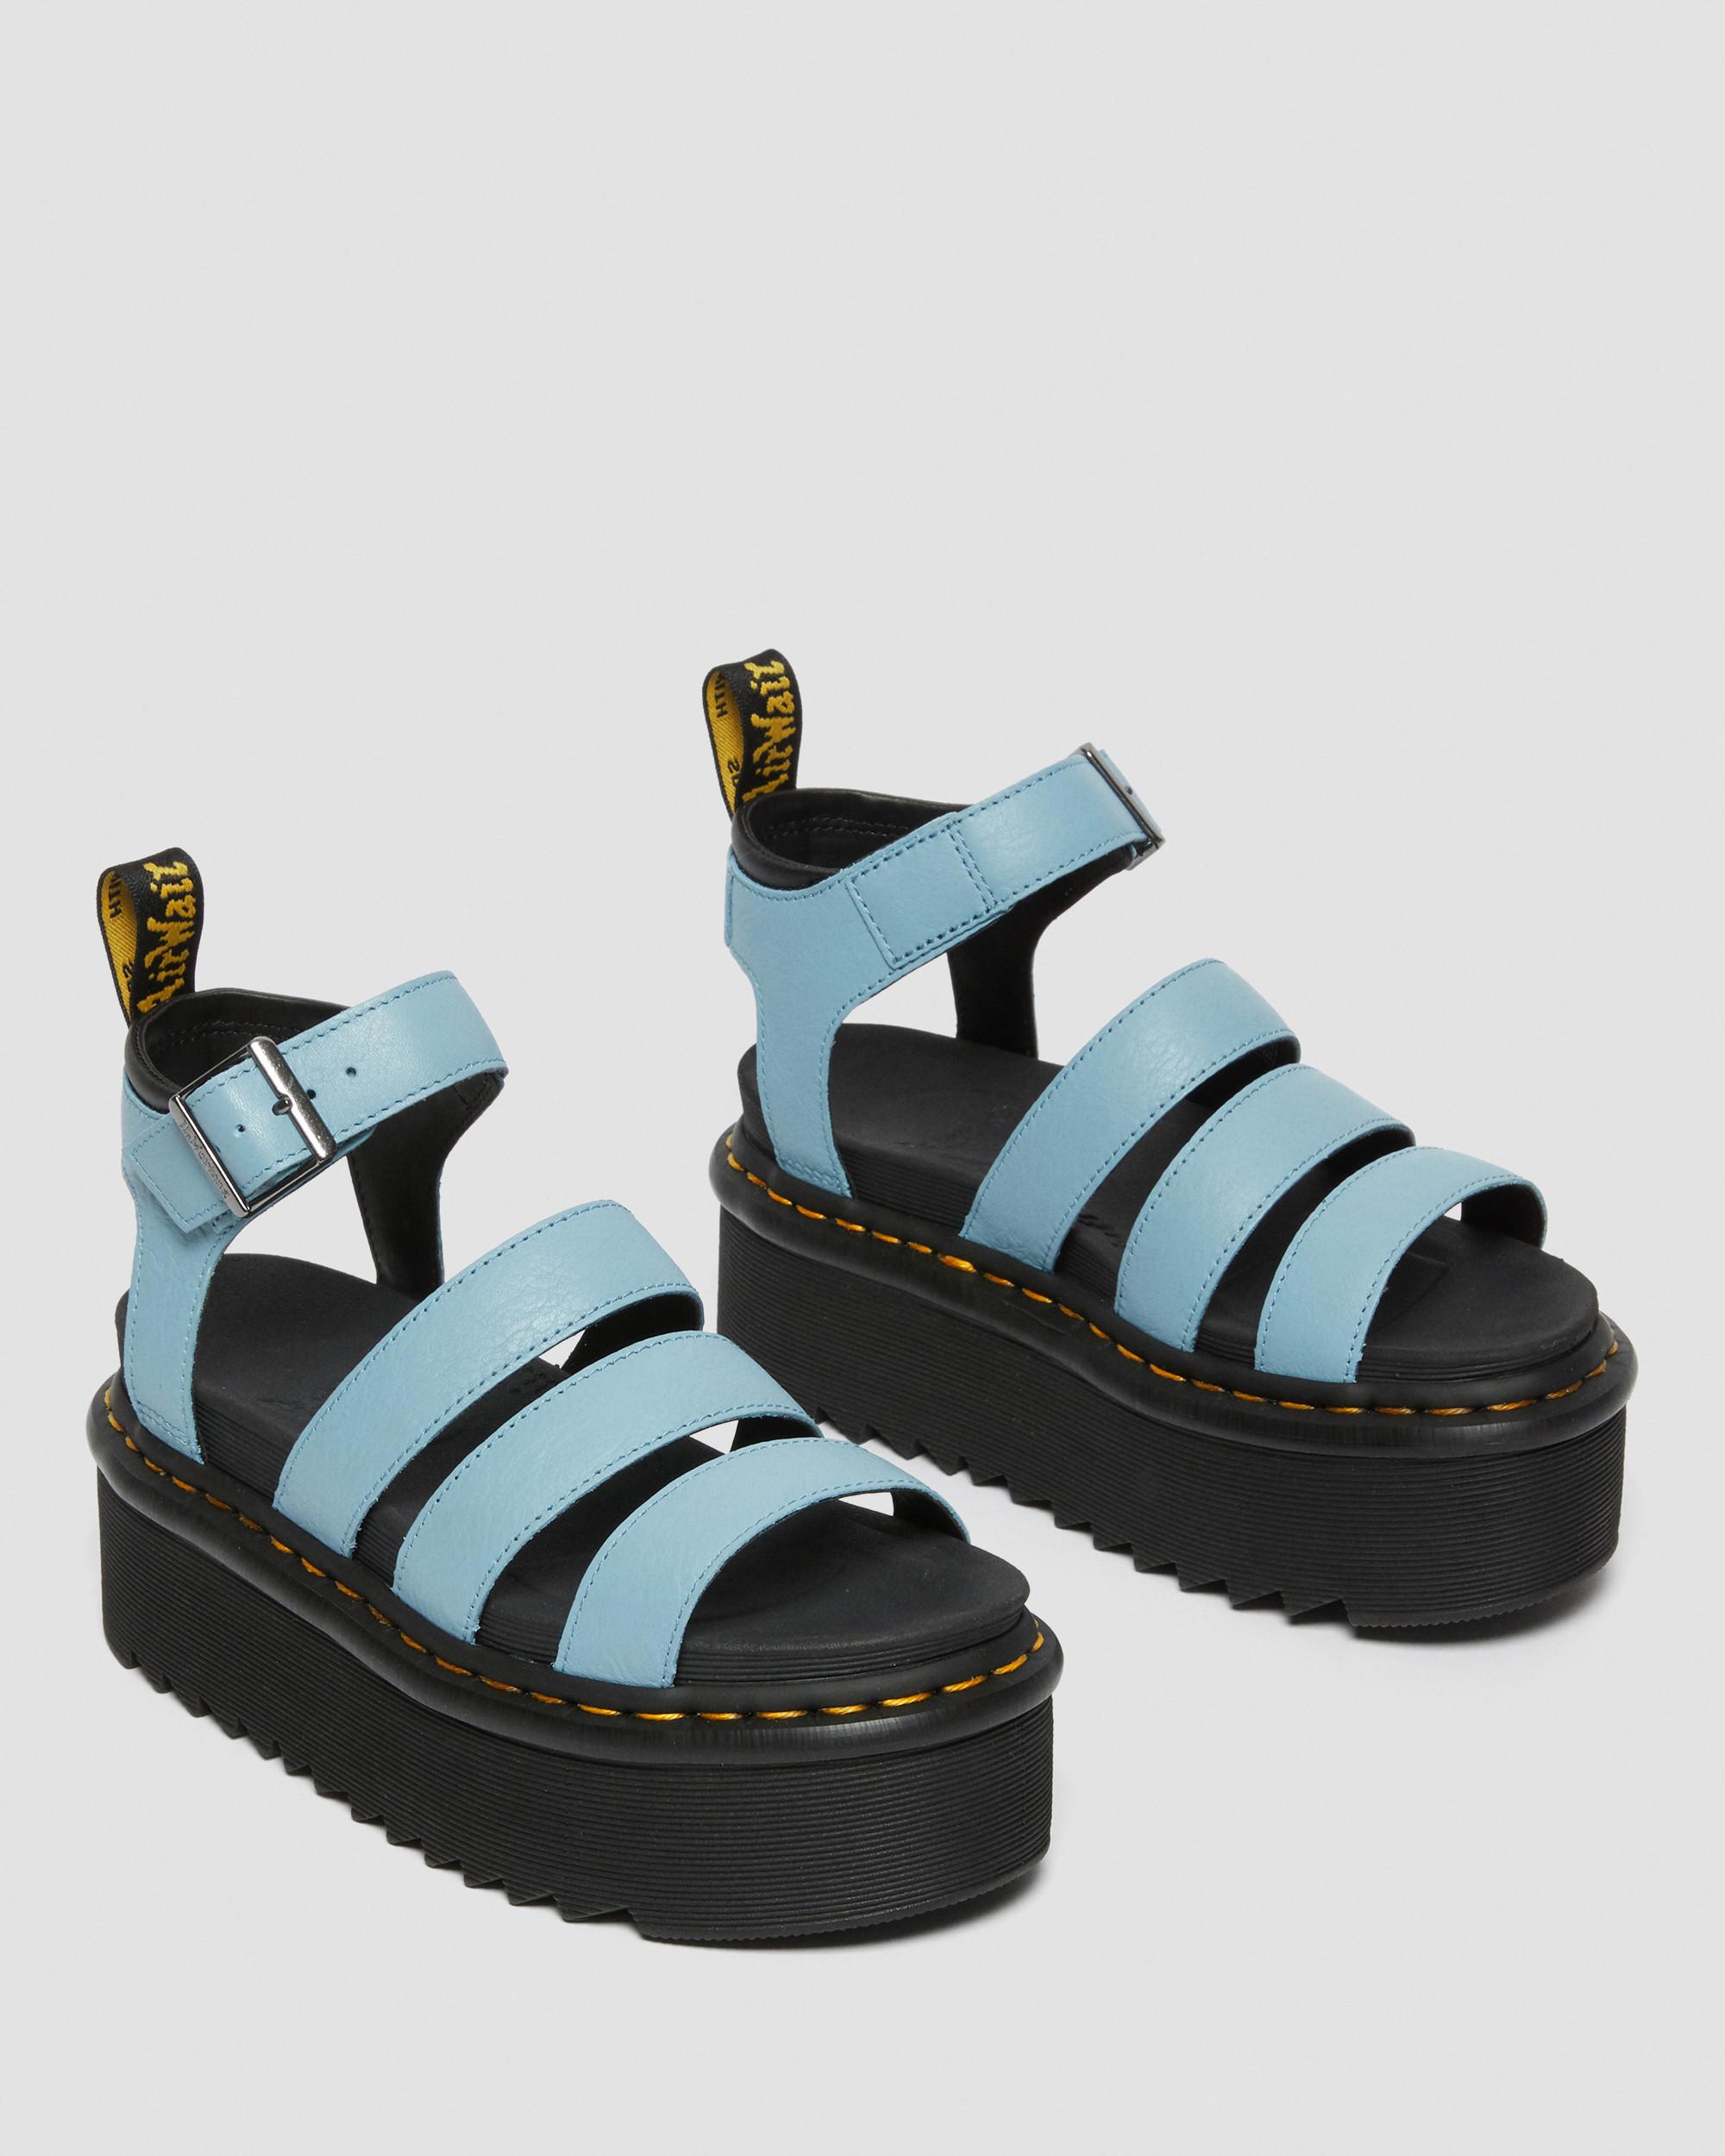 Blaire Quad Pisa Leather Strap Platform Sandals in Blue | Dr. Martens